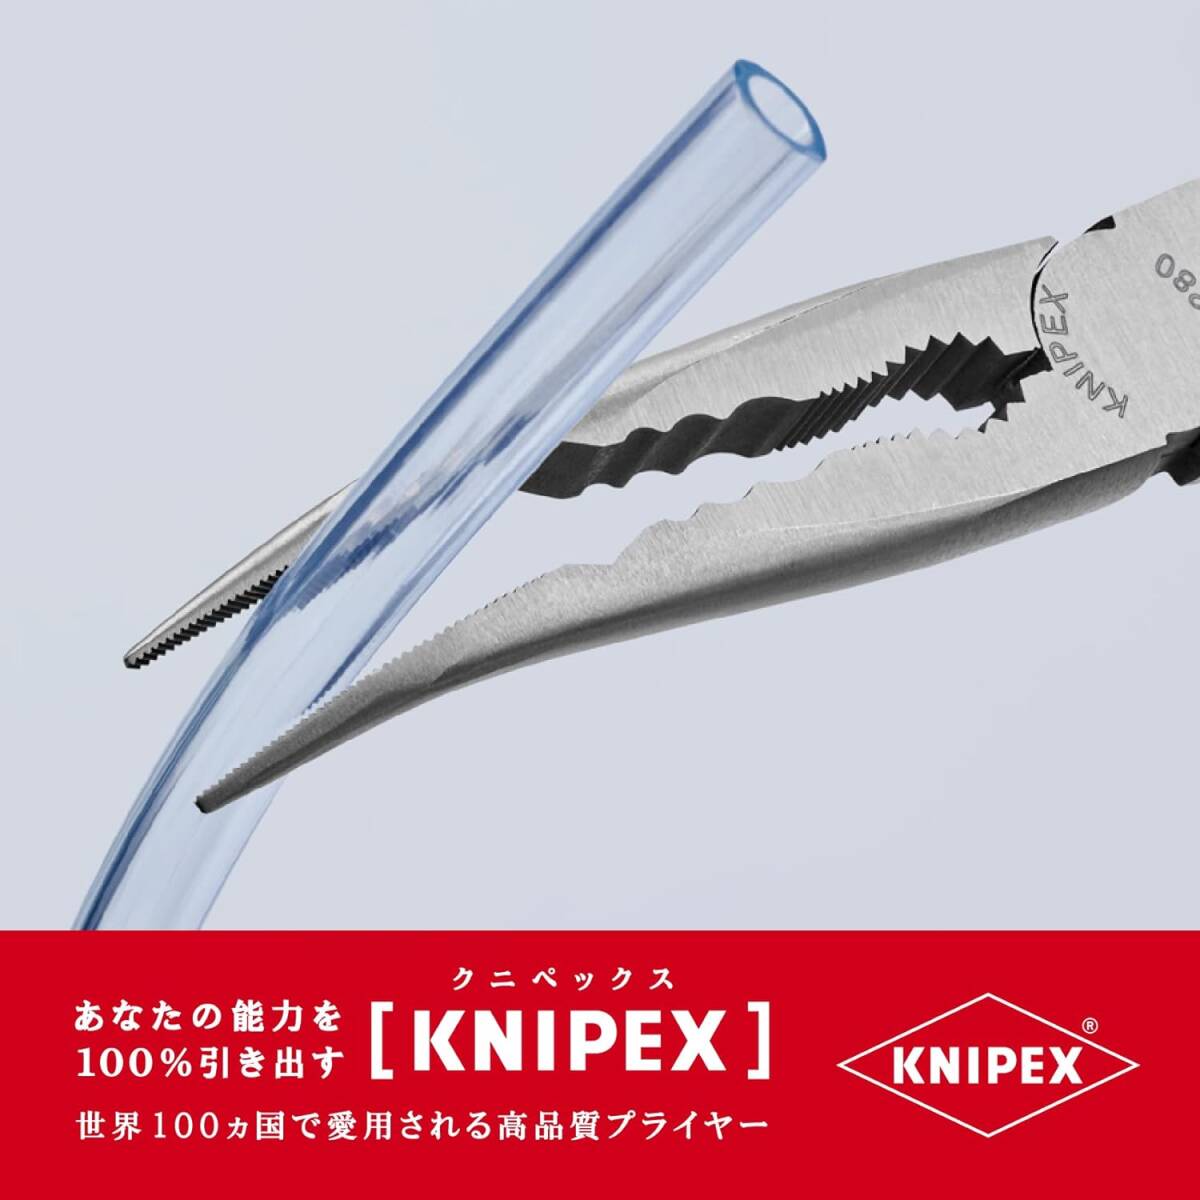 KNIPEX 2881 280(knipeks) в сборе плоскогубцы 